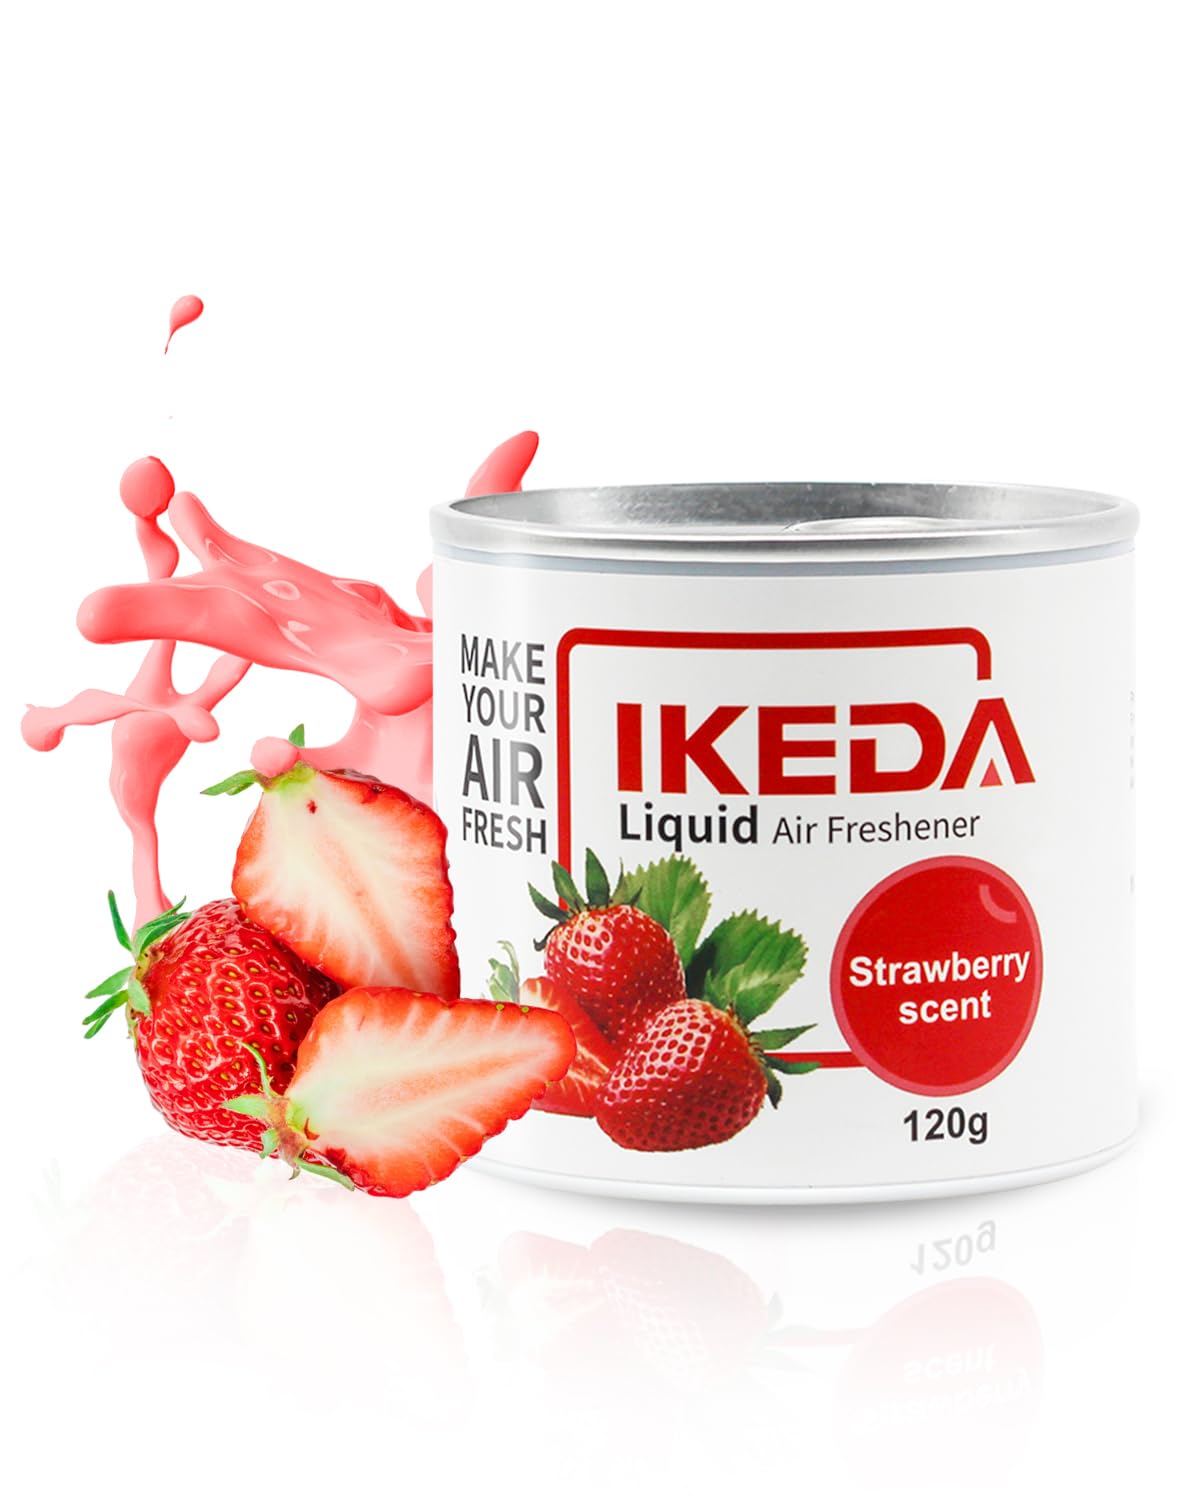 Ikeda Liquid Air freshener Strawberry Scent – 120g - Next Cash and